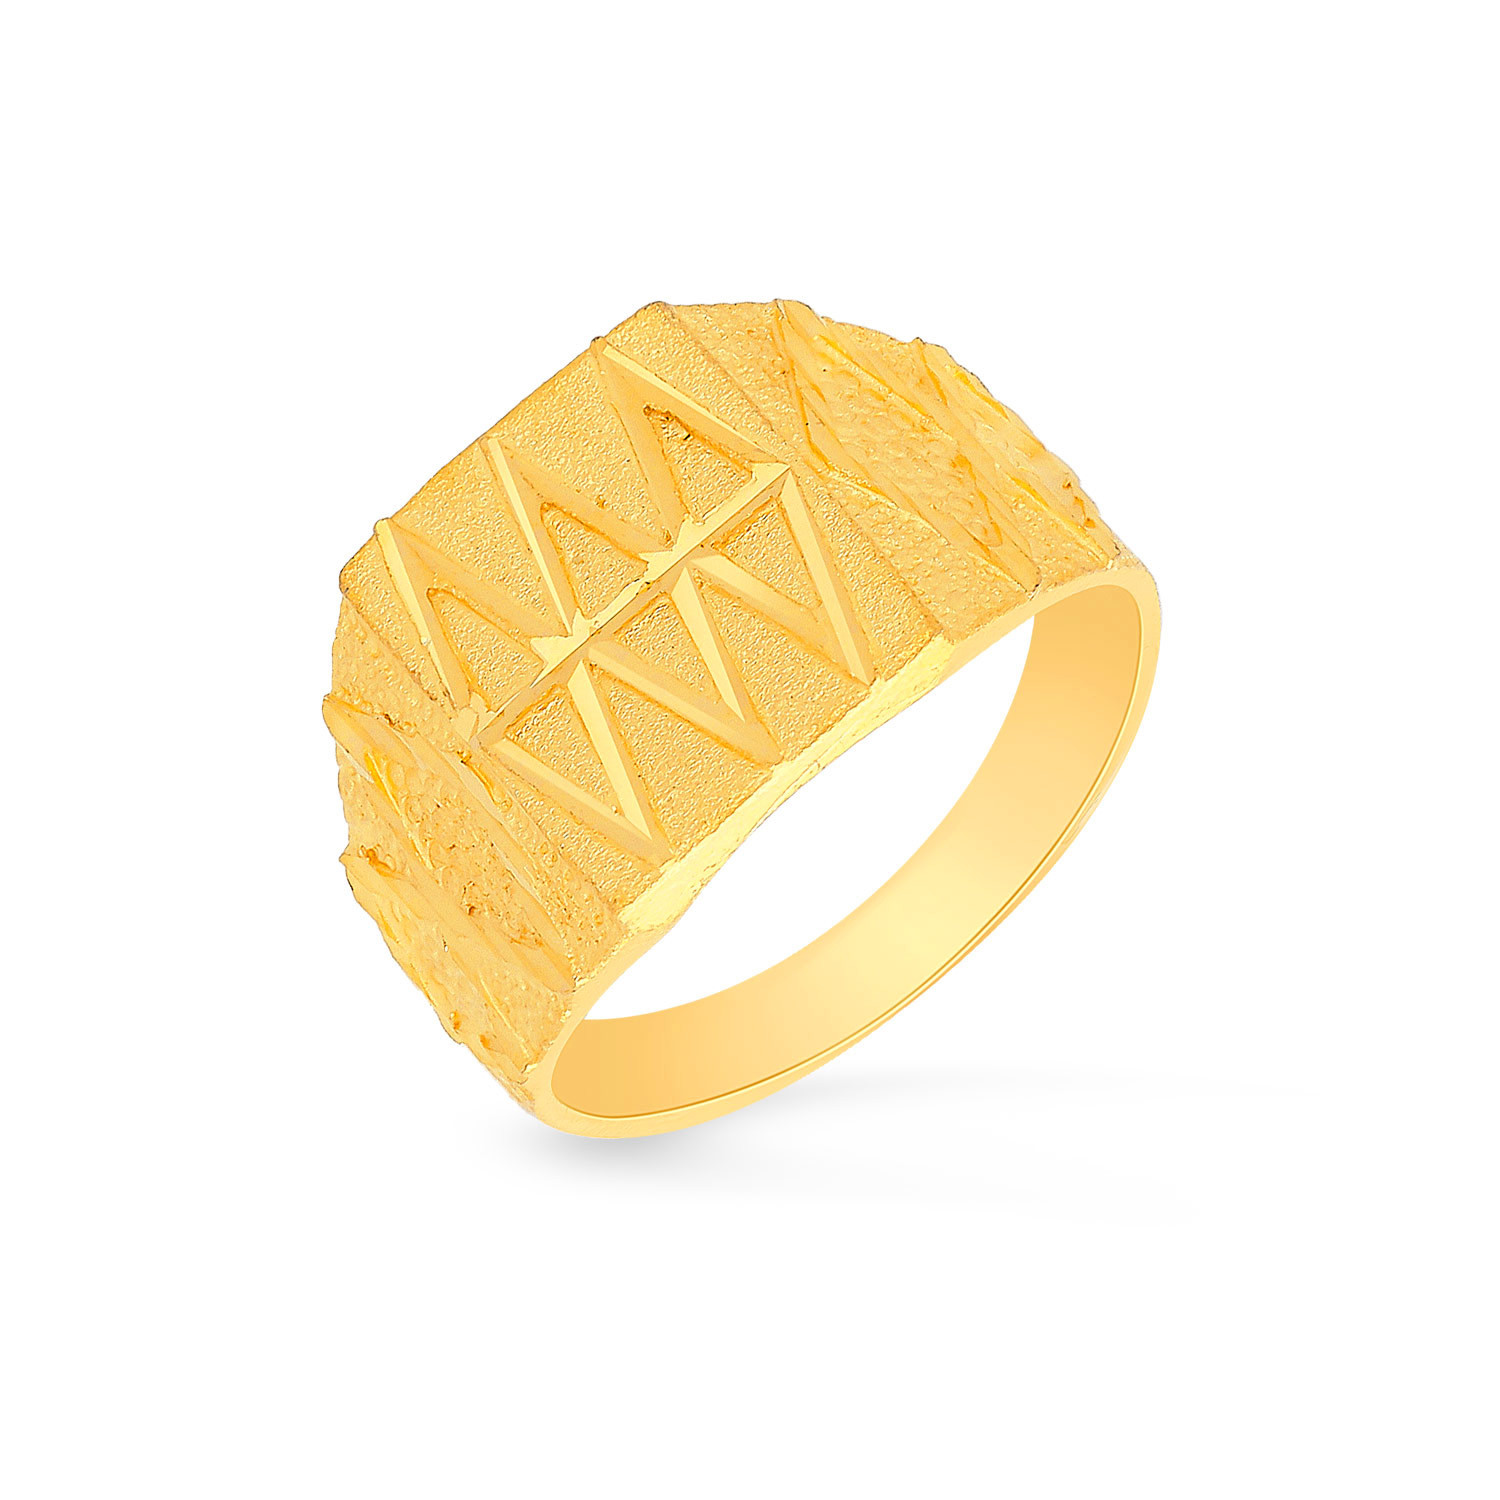 Senco Gold Hand Made 22kt Yellow Gold ring Price in India - Buy Senco Gold  Hand Made 22kt Yellow Gold ring online at Flipkart.com